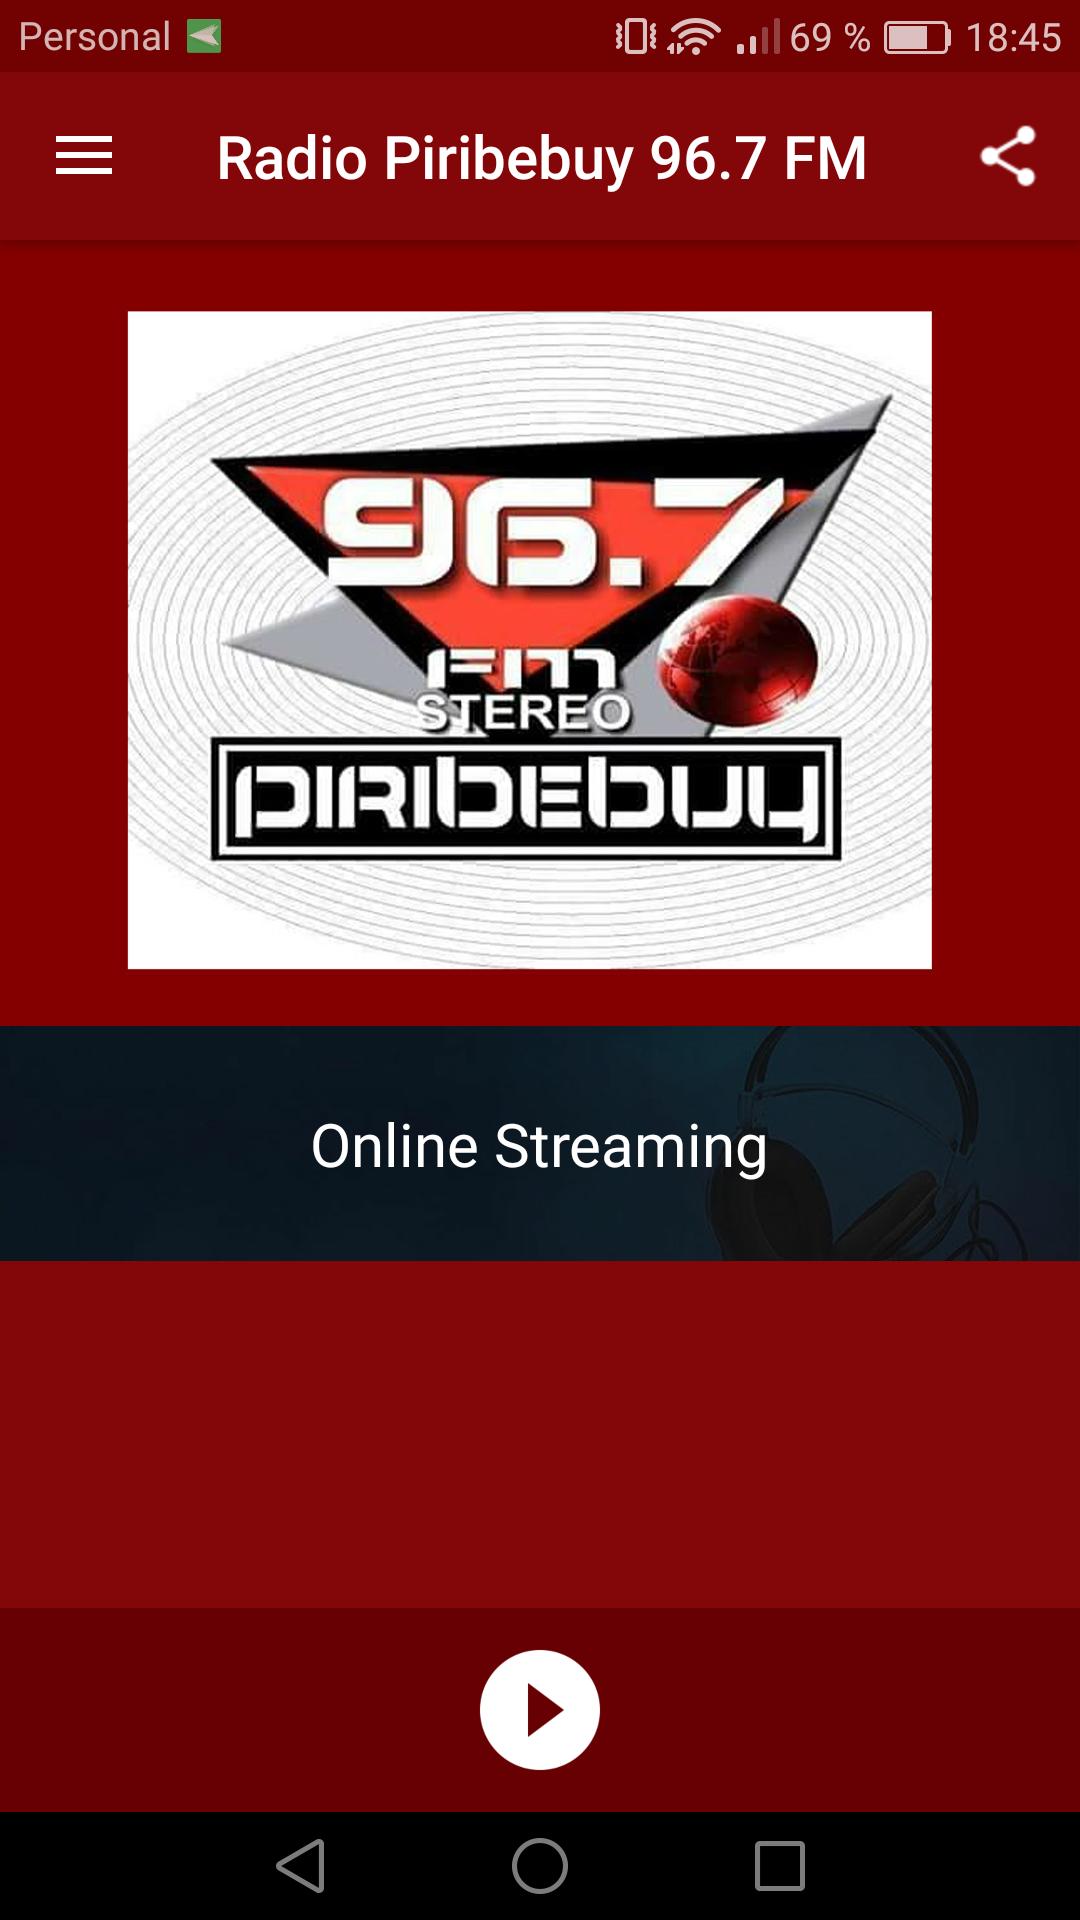 Radio Piribebuy 96.7 FM for Android - APK Download